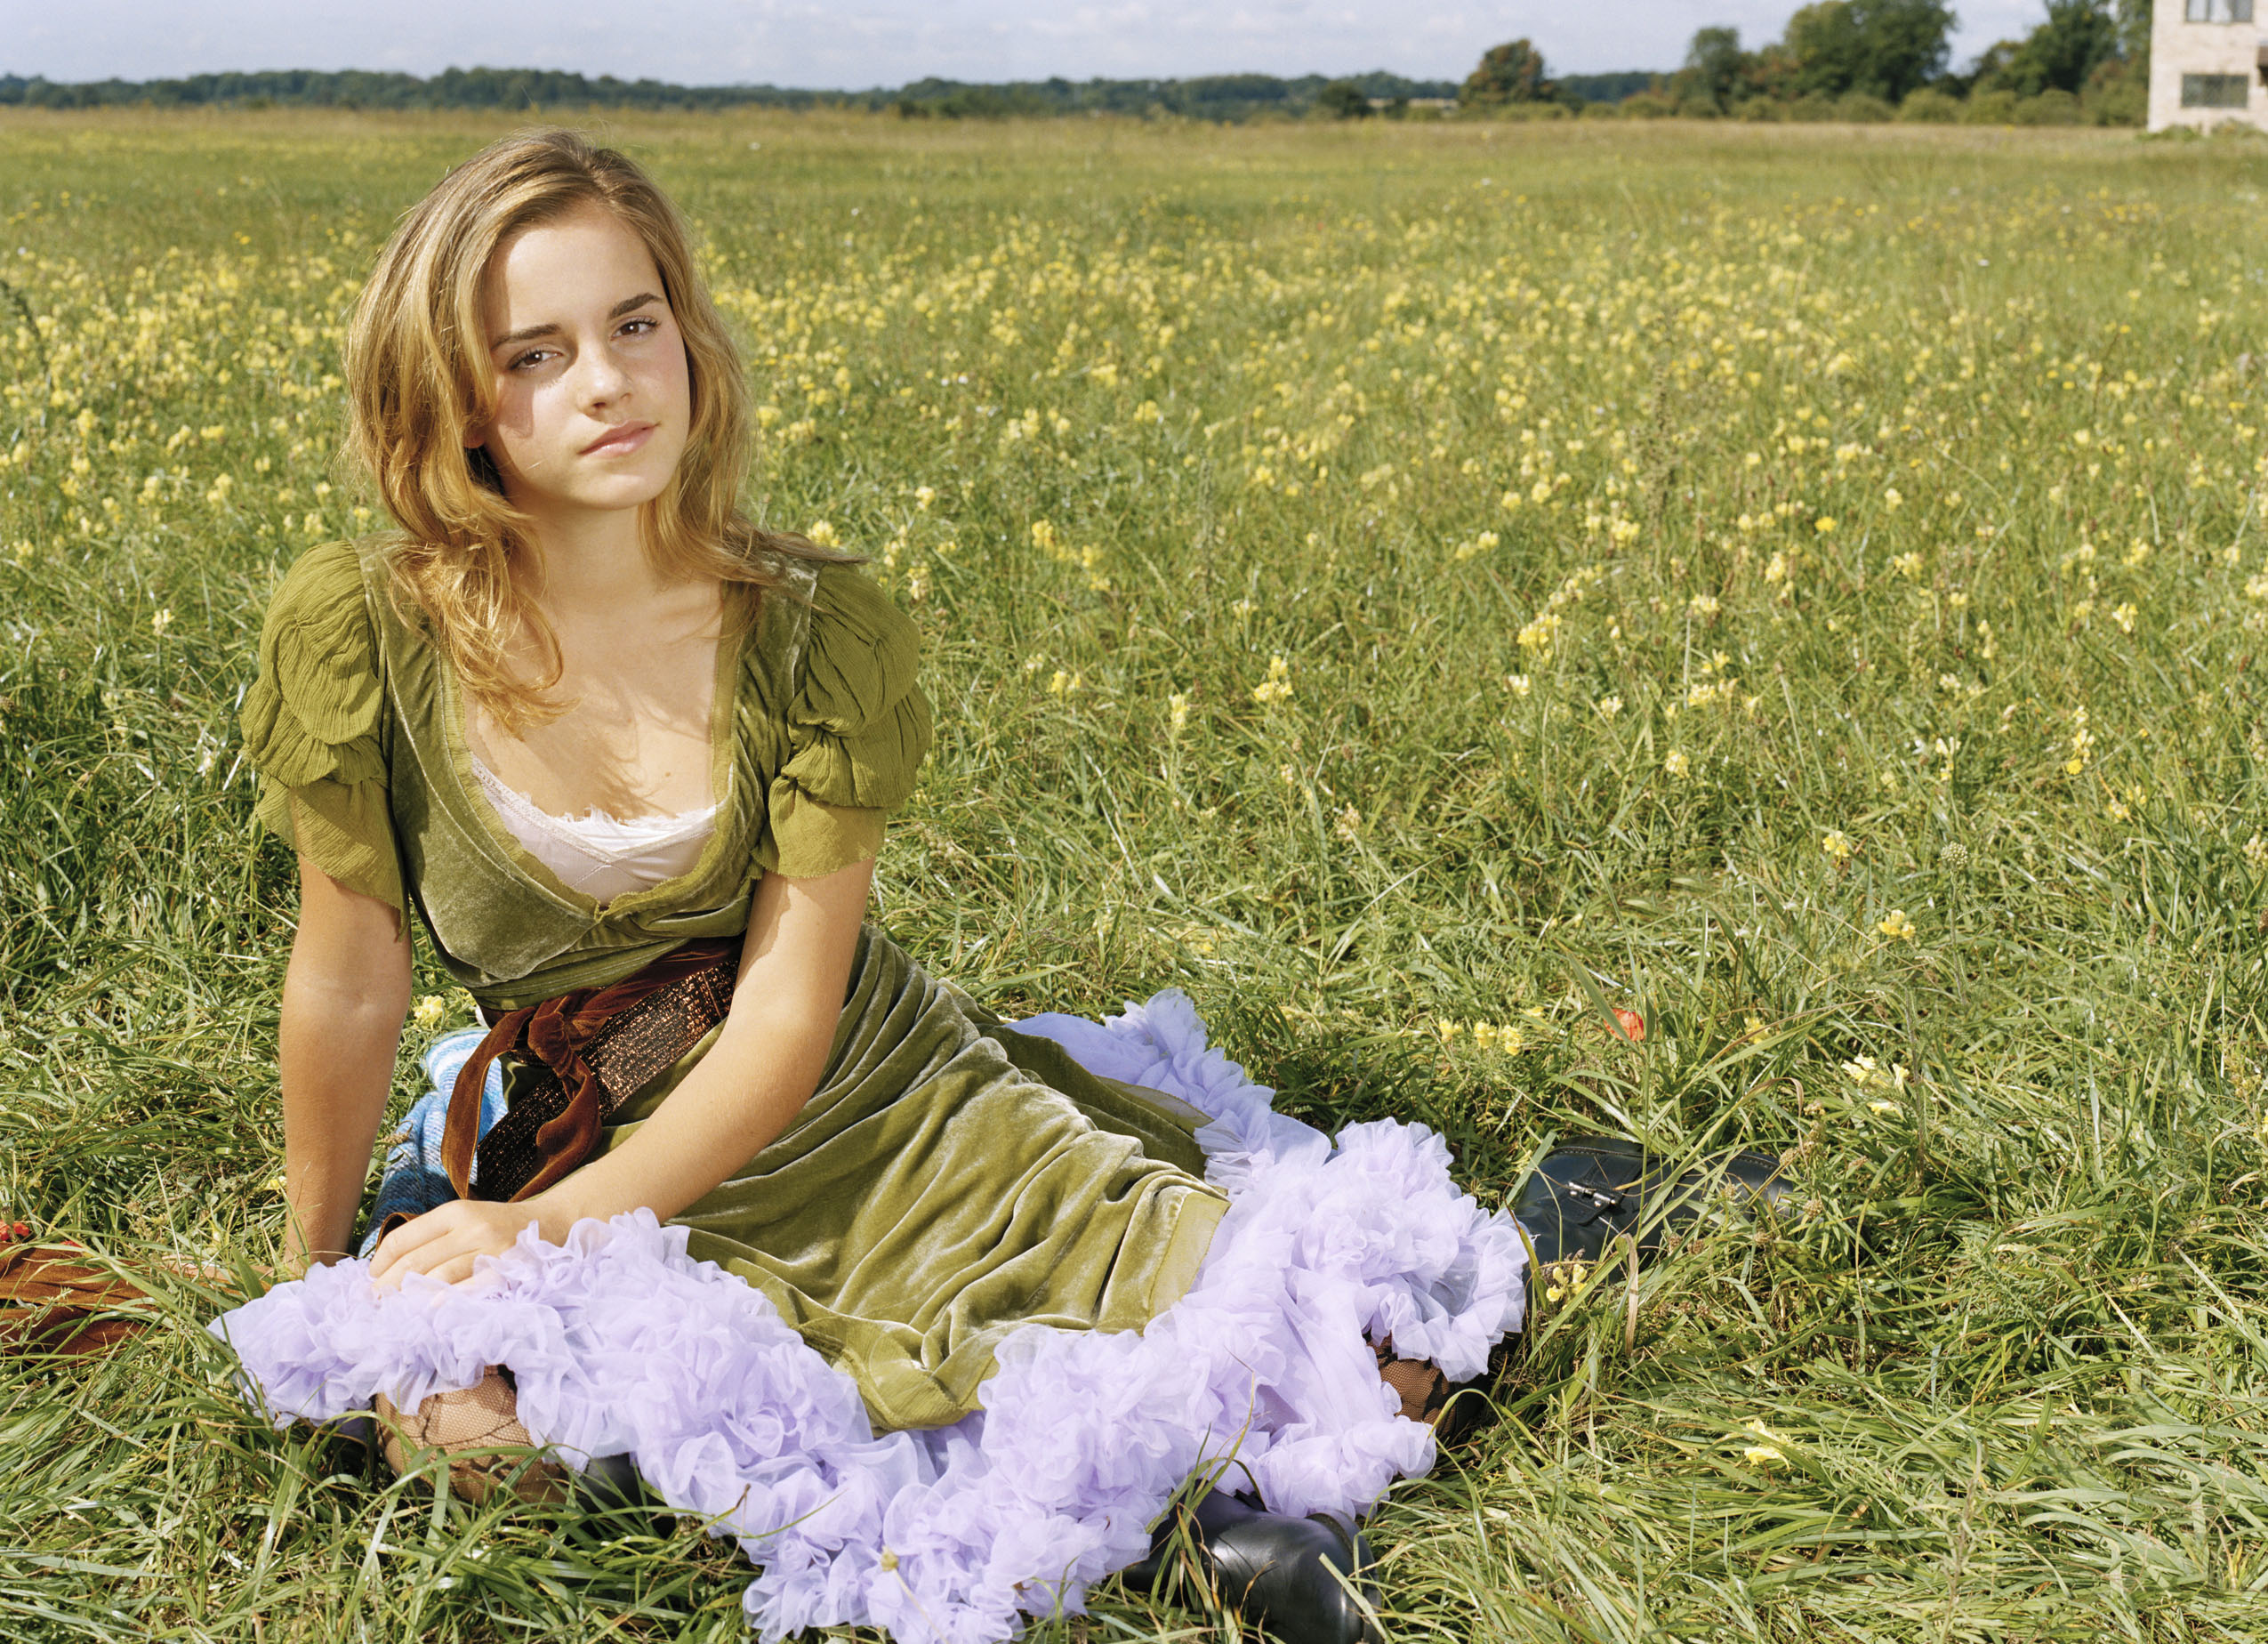 blondes, women, eyes, Emma Watson, dress, fields, outdoors, girls in nature - desktop wallpaper